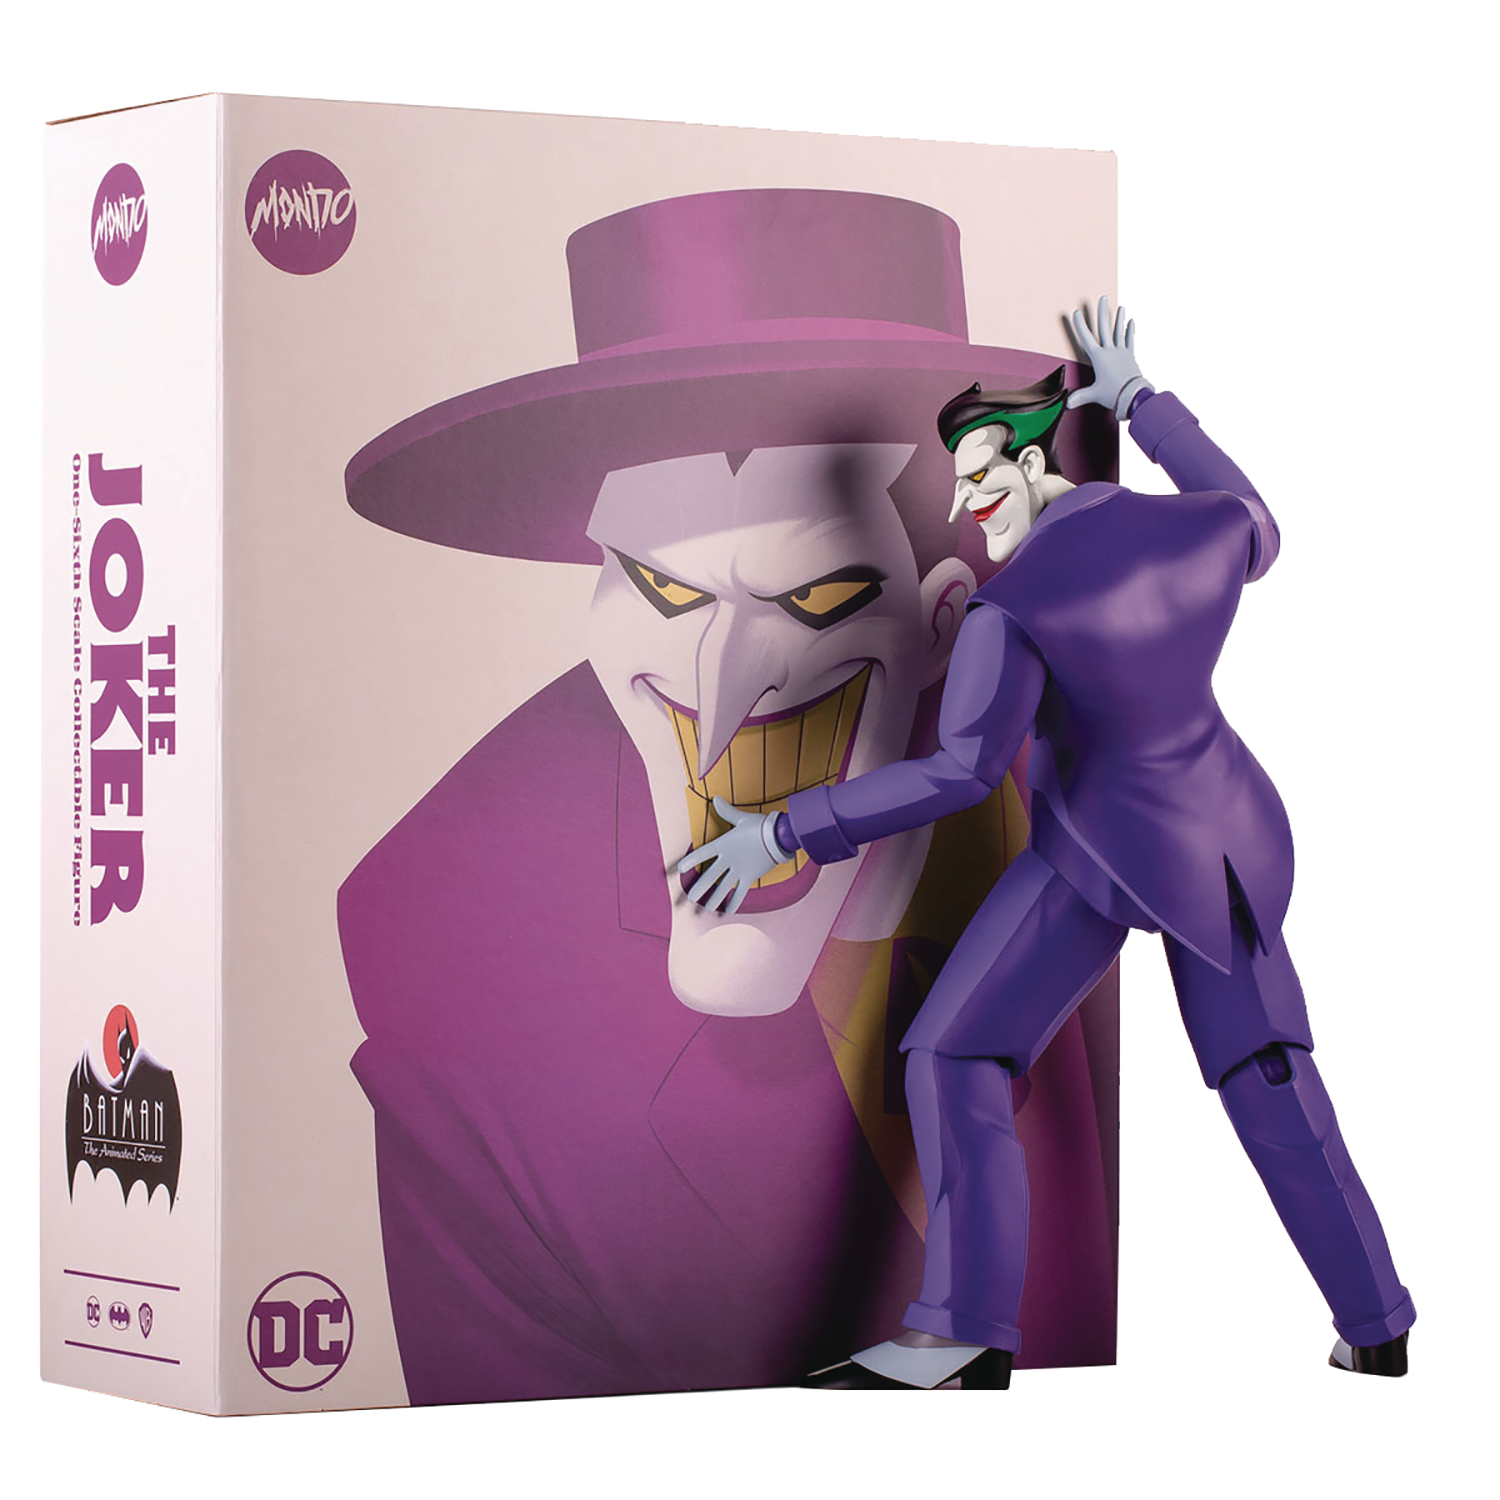 Batman Animated Joker 1/6 Scale Collectible Figure Regular